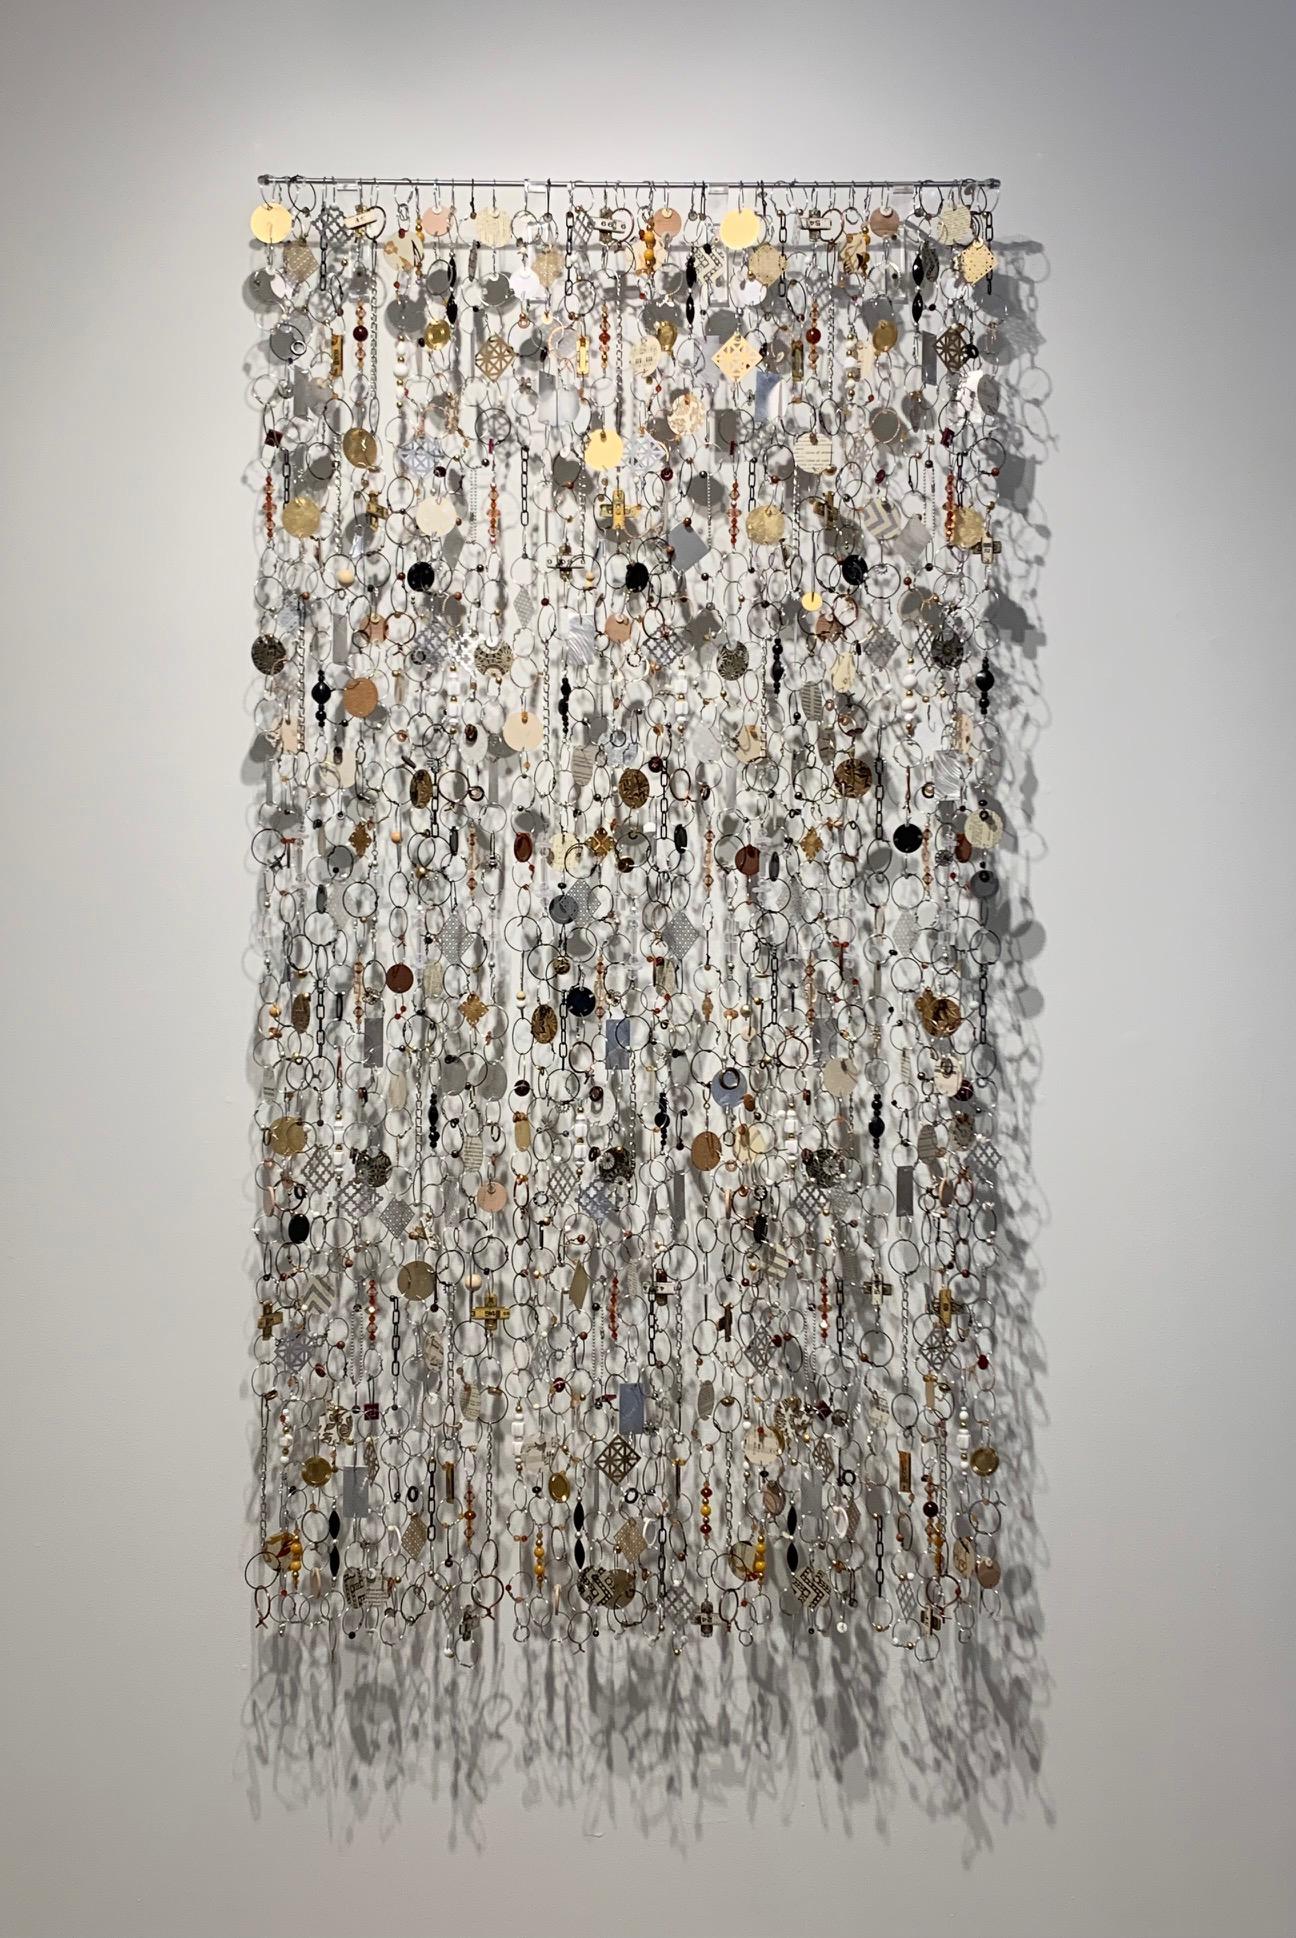 John Garrett Abstract Sculpture - "Trinket Net No. 3", Mixed Media, Tapestry, Wall Sculpture, Metal, Plastics